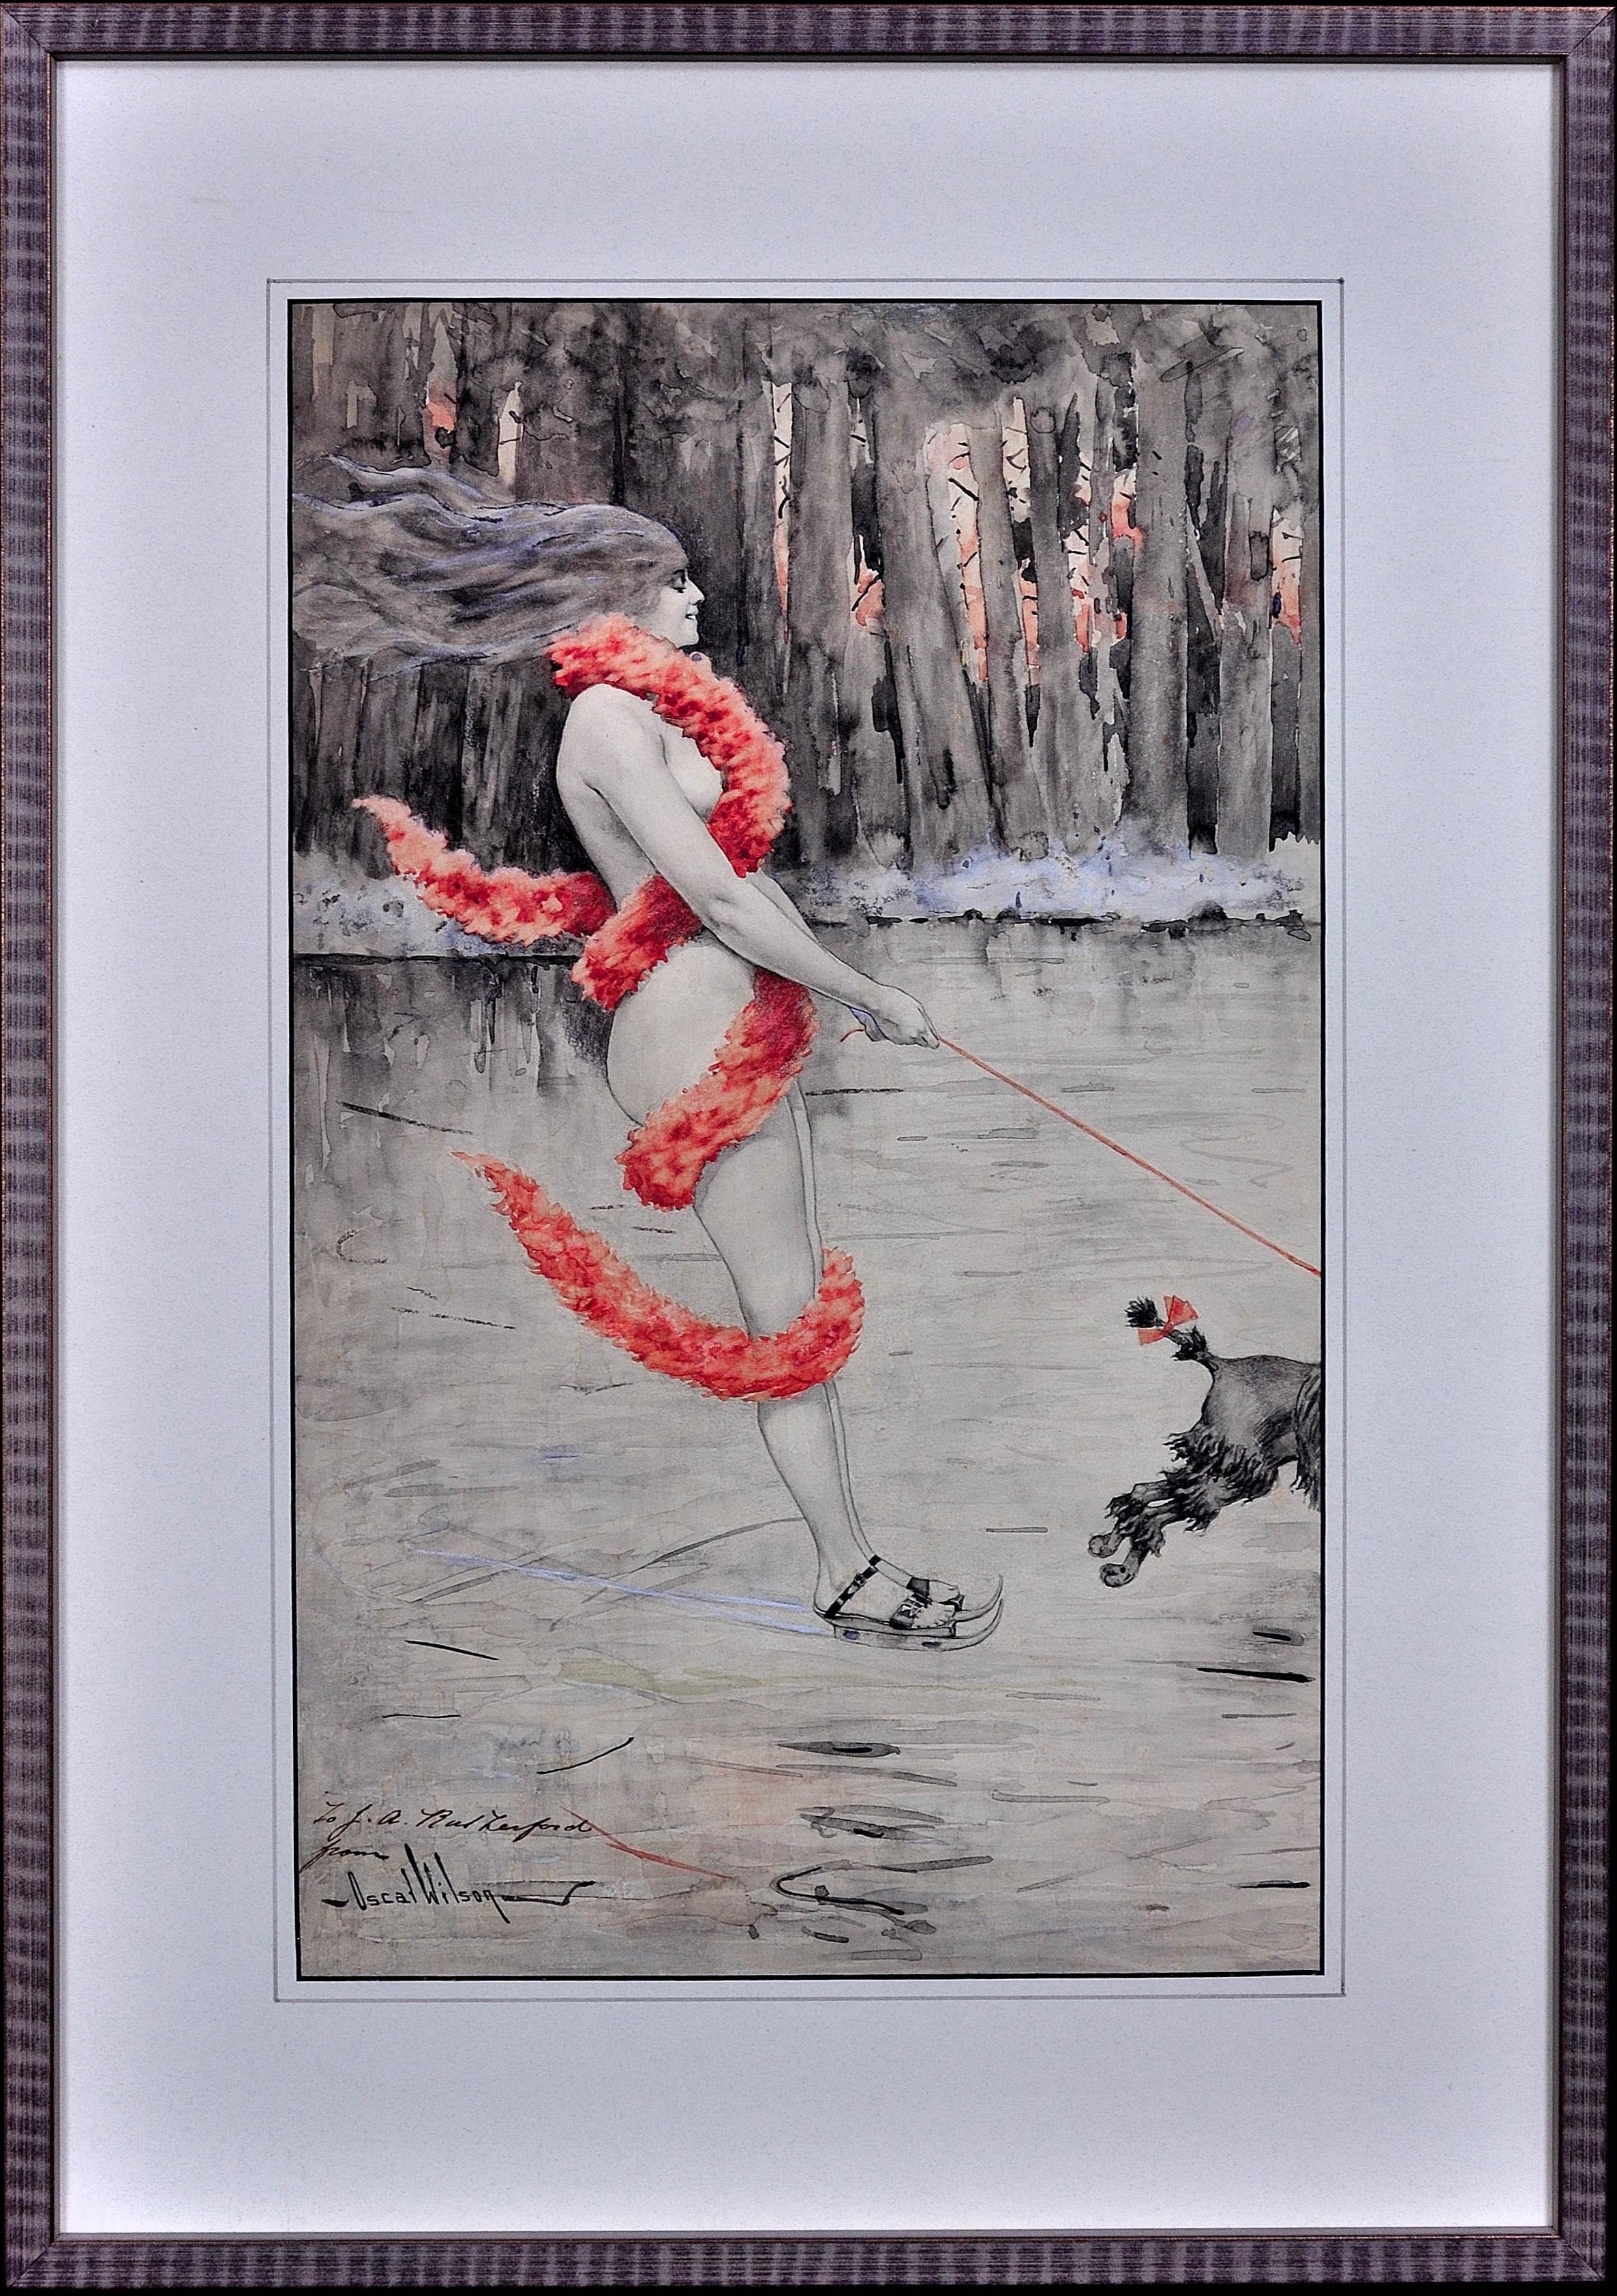 Oscar Wilson Animal Art – The Lady of the Lake. Nackte Dame mit rotem Boa- Skating-Pudel im Jugendstil, wie fun